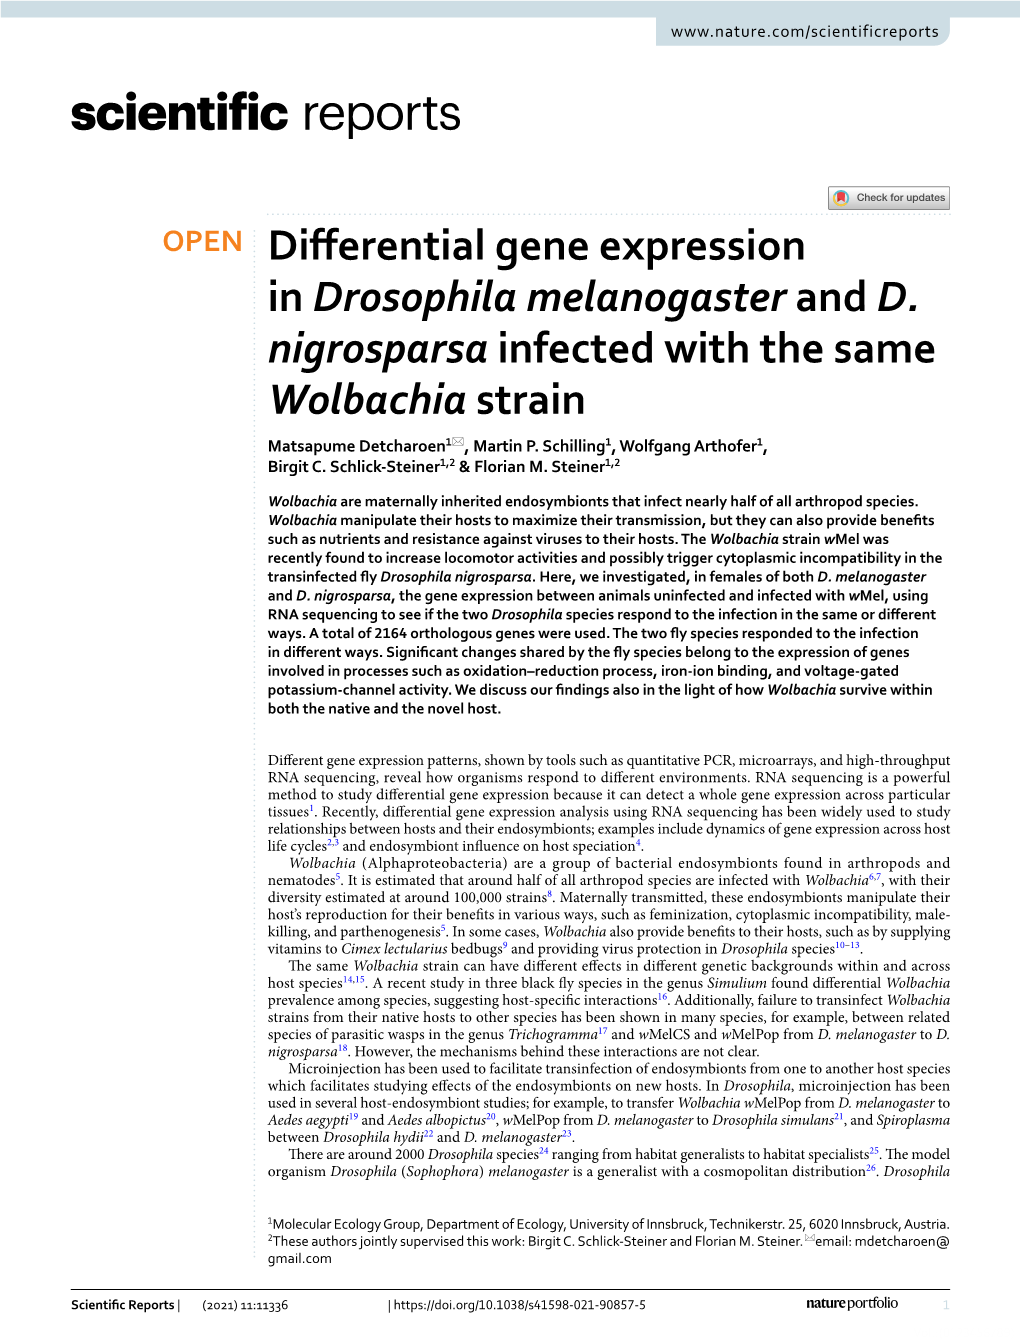 Differential Gene Expression in Drosophila Melanogaster and D